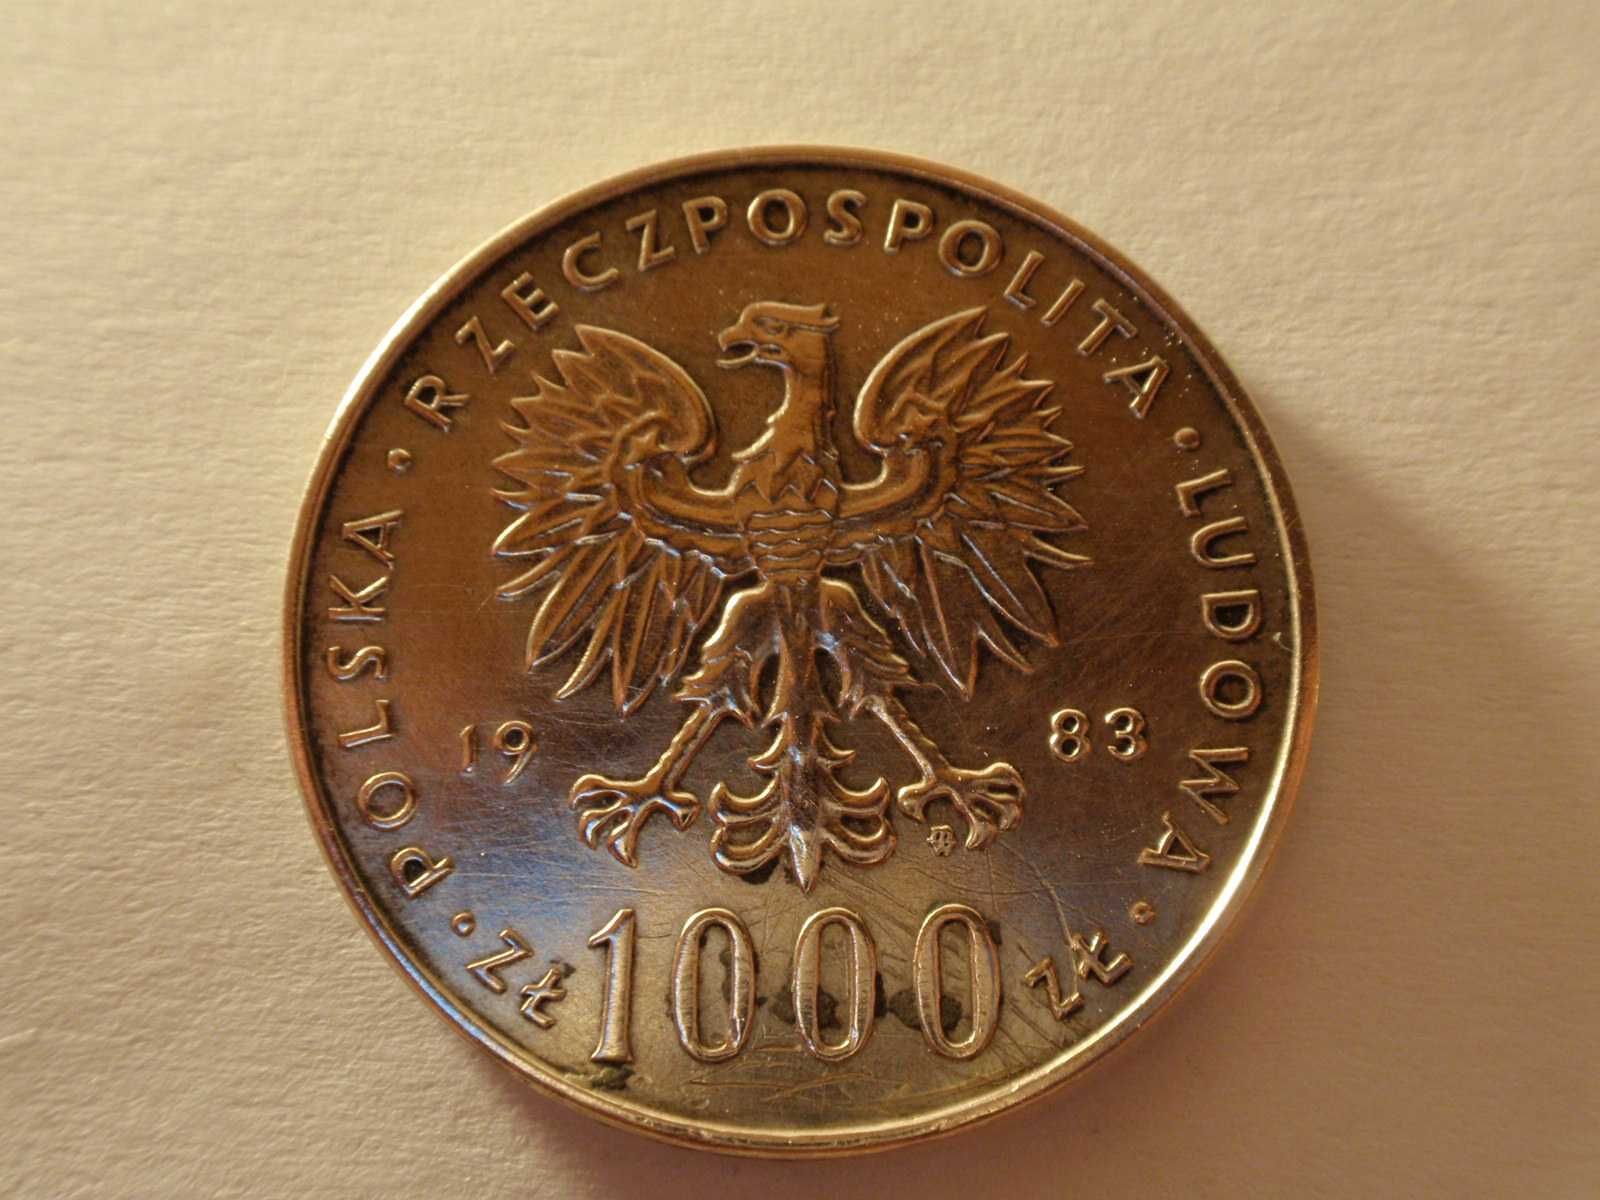 Moneta 1000 zł z Papieżem plus gratis